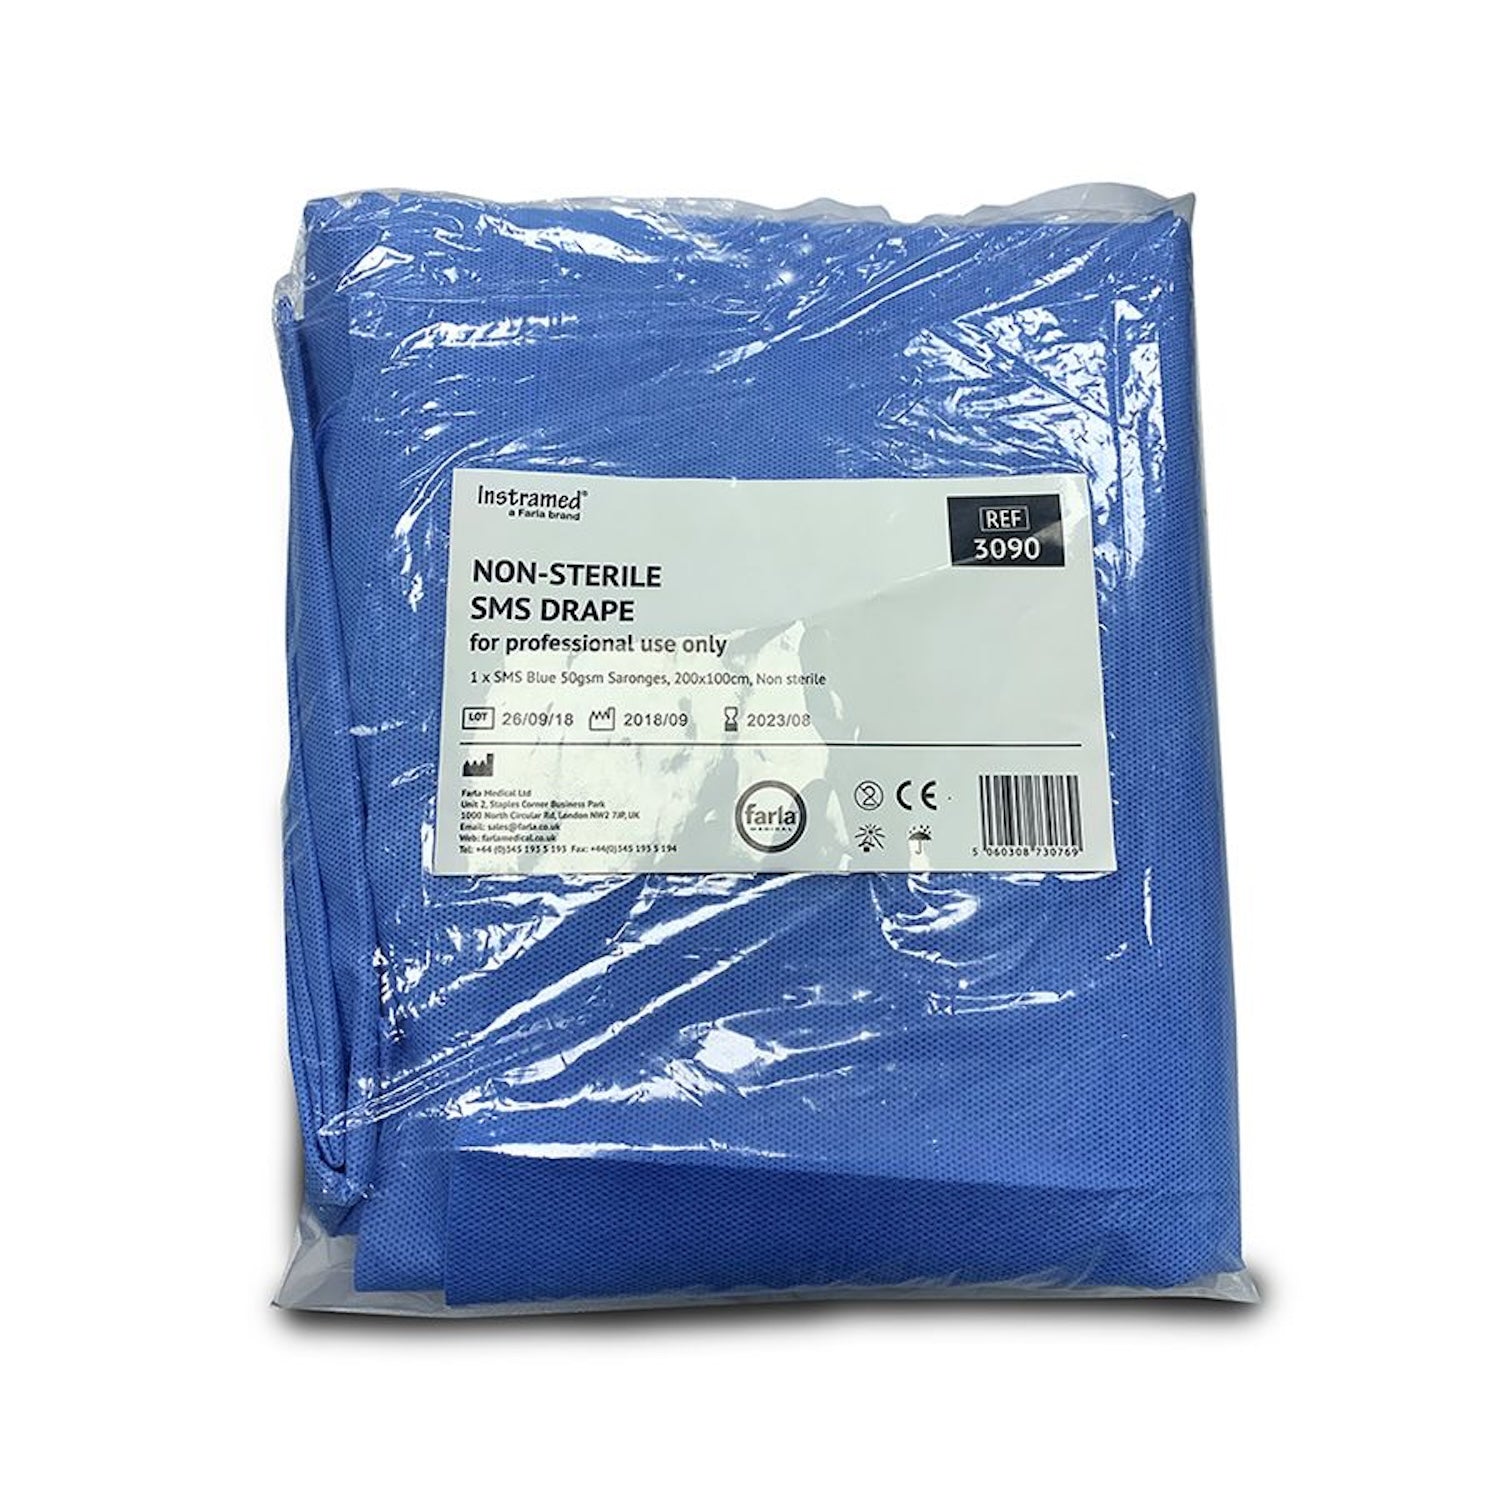 Instramed Drape | Non-Sterile | SMS Blue | 50gsm | Single